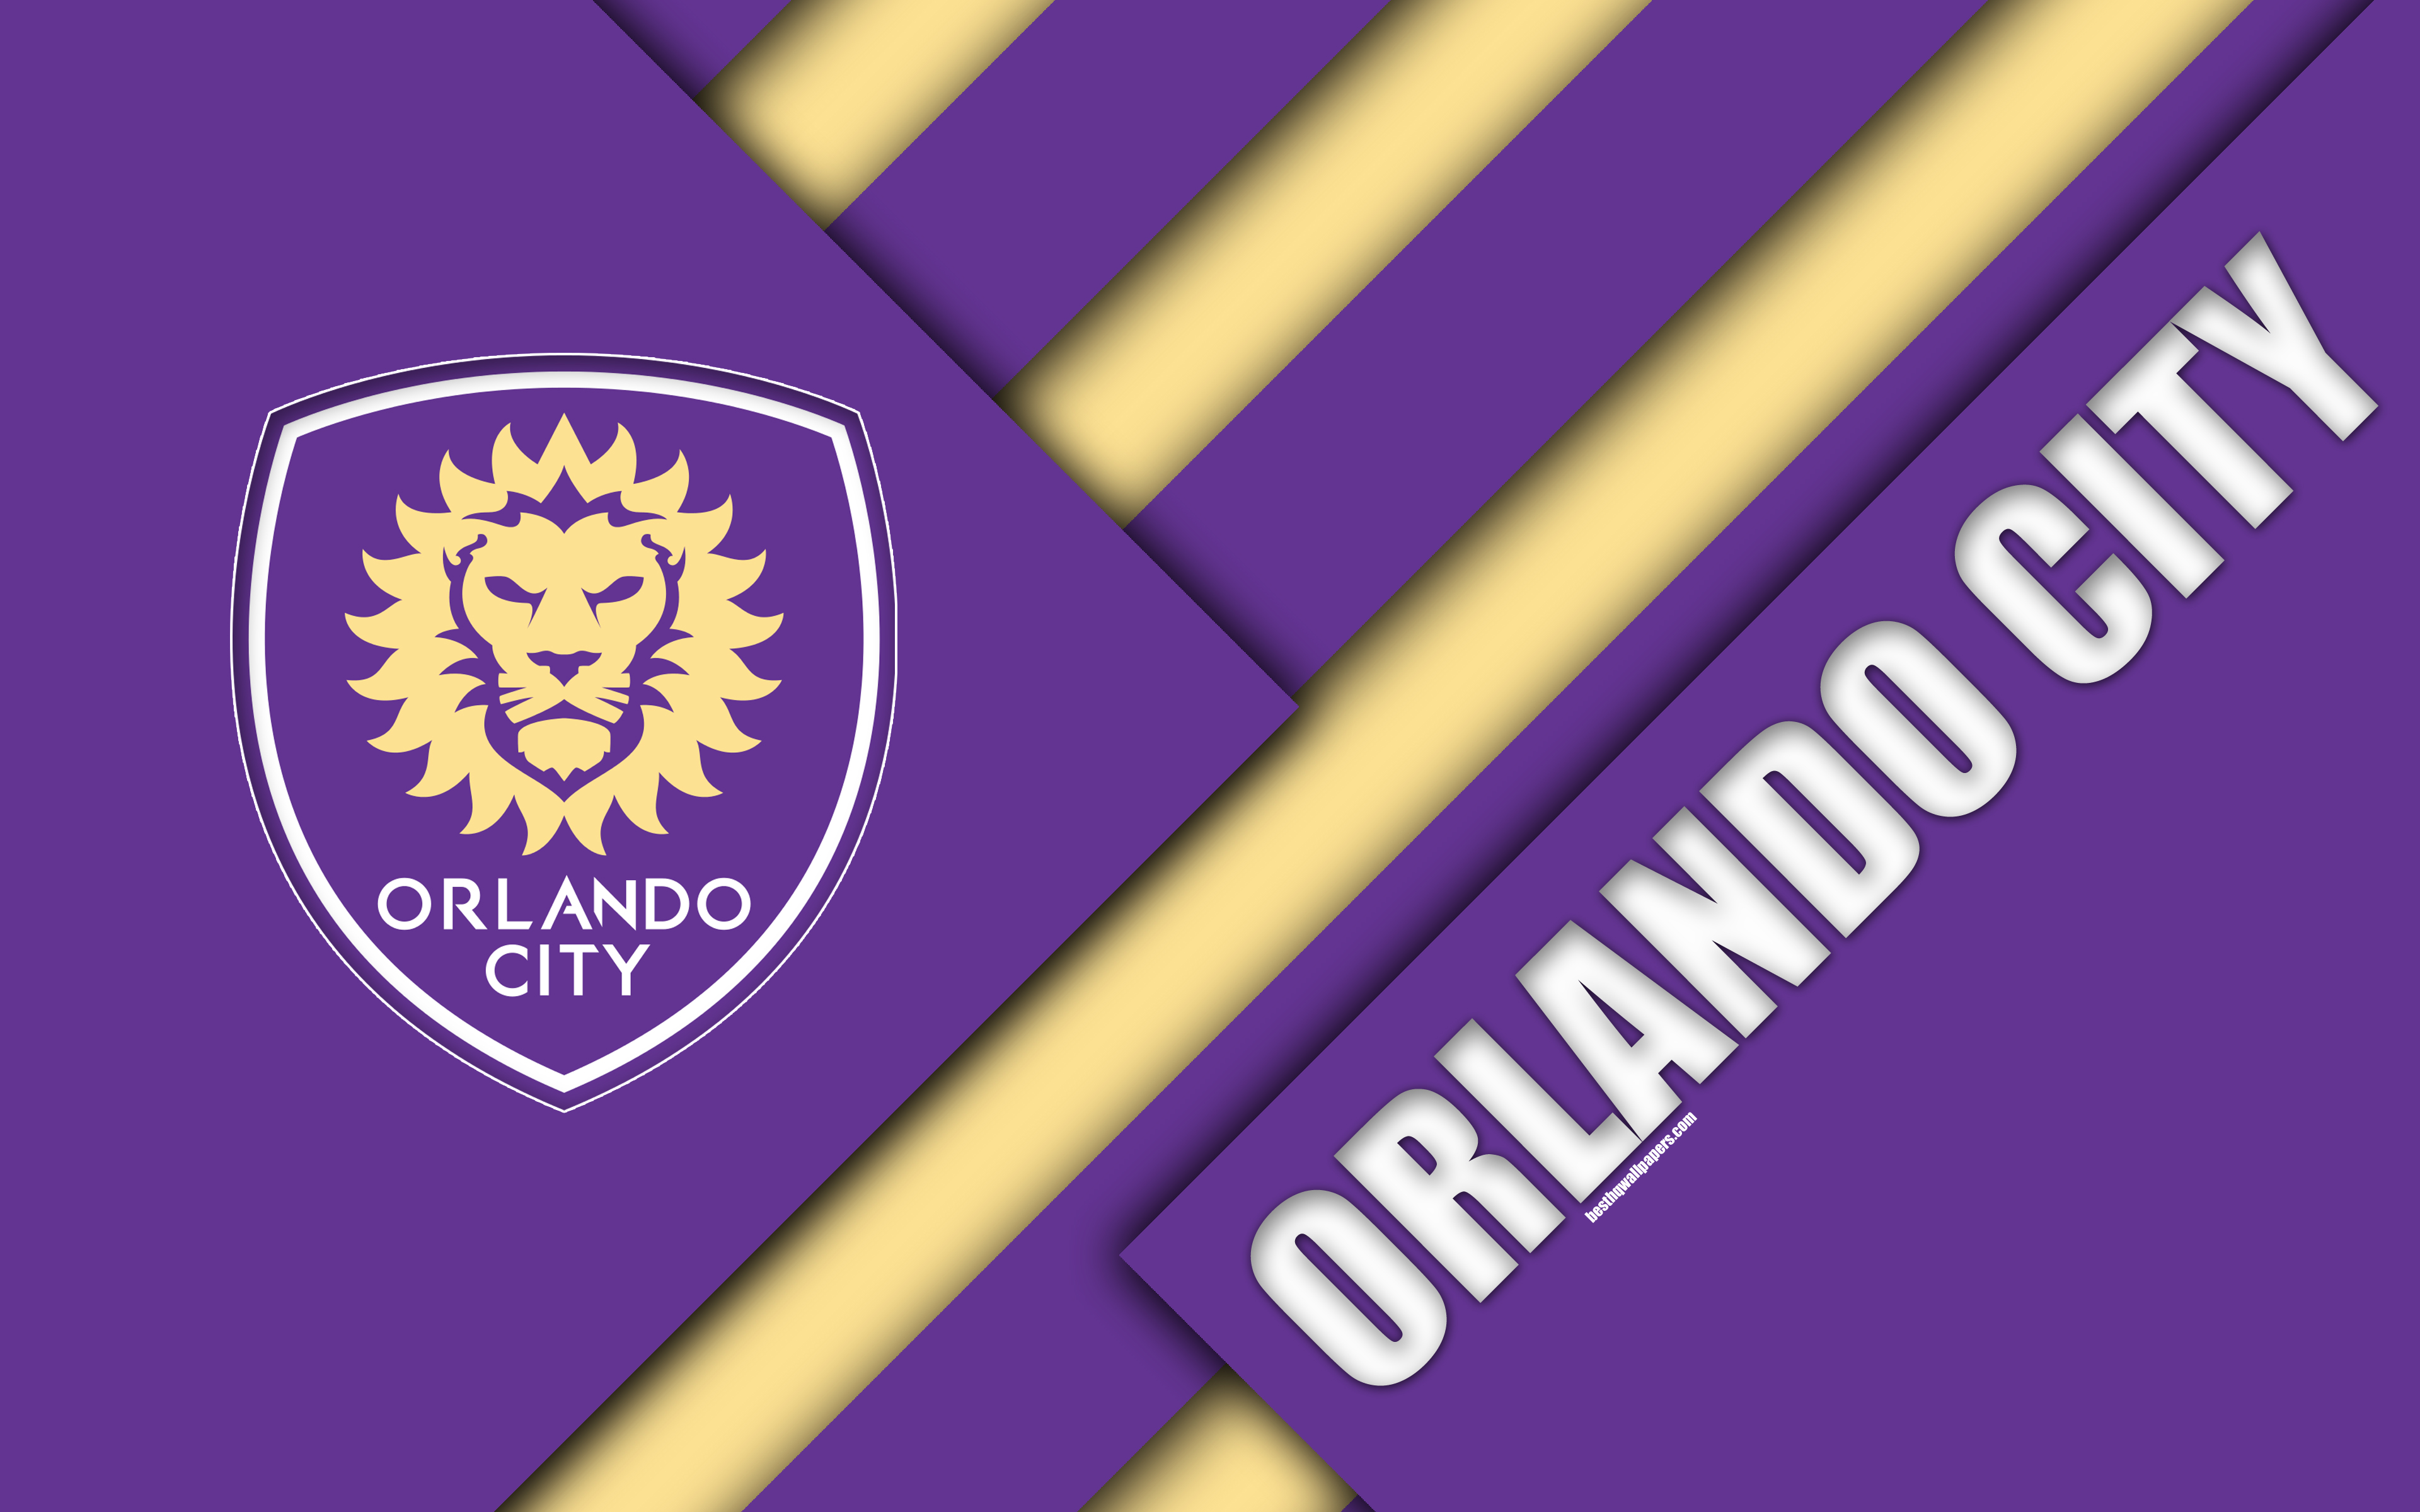 Download wallpaper Orlando City SC, material design, 4k, logo